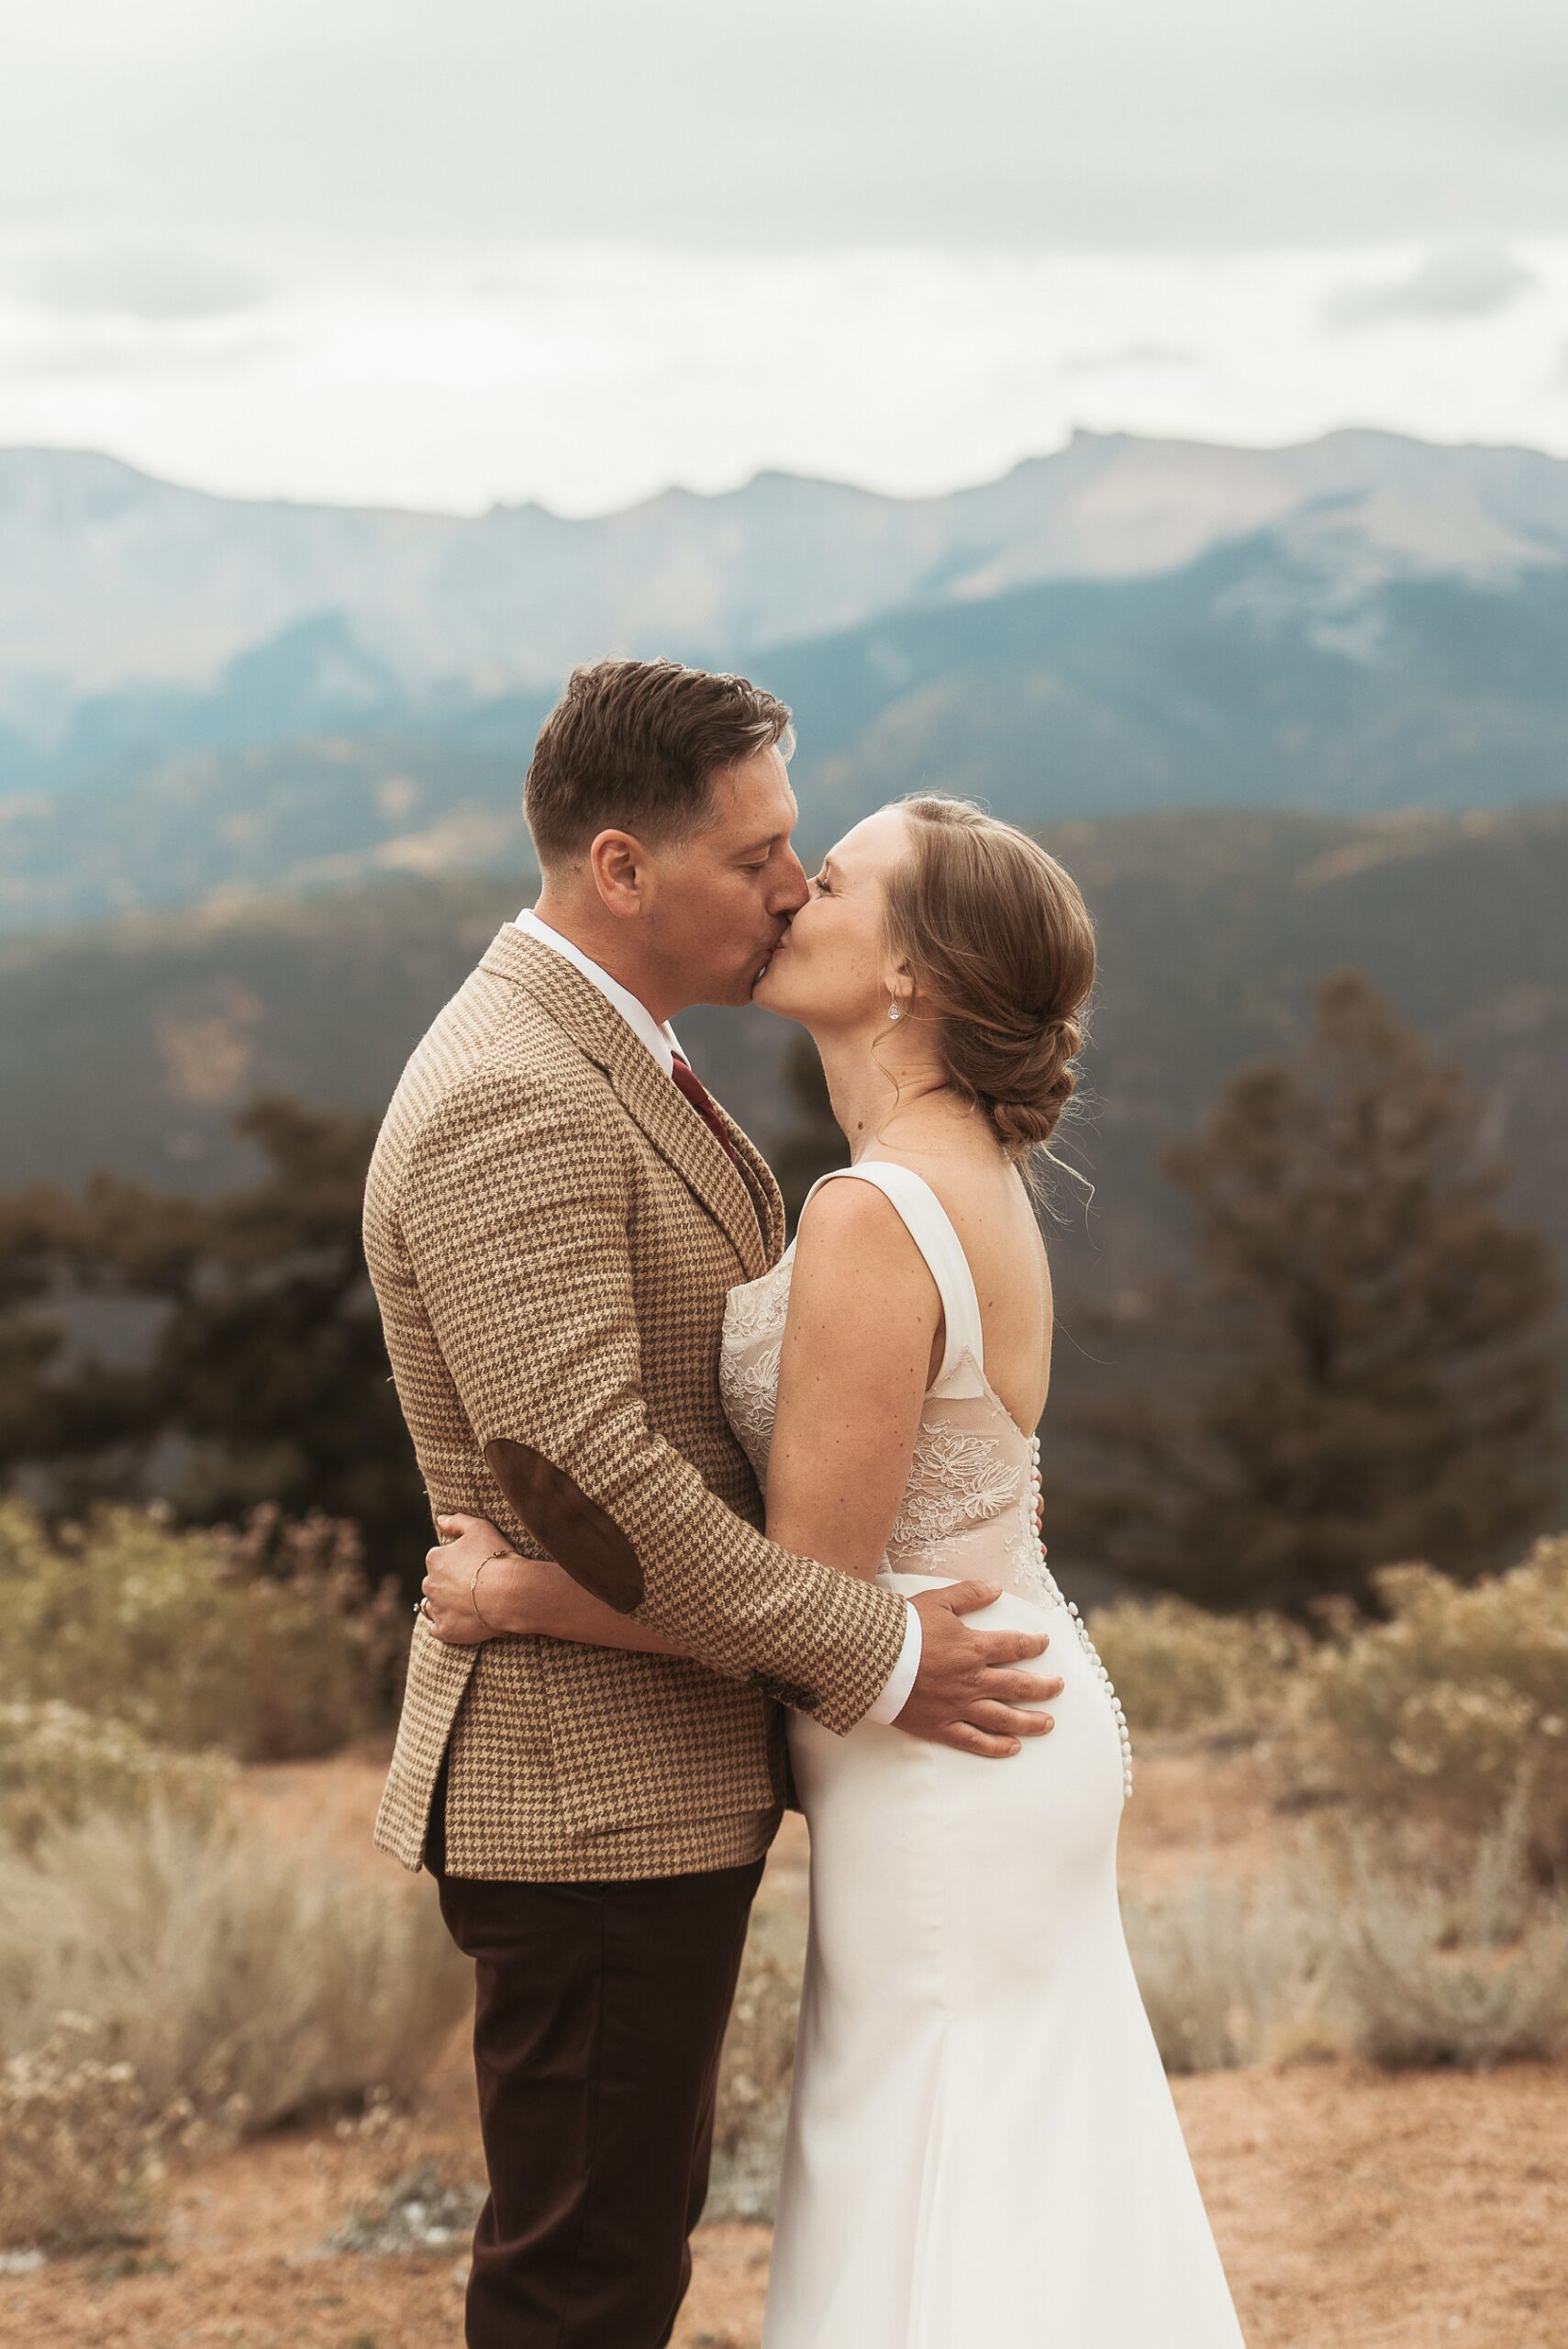 Brid enad groom's first kiss at Airbnb wedding venue in Colorado